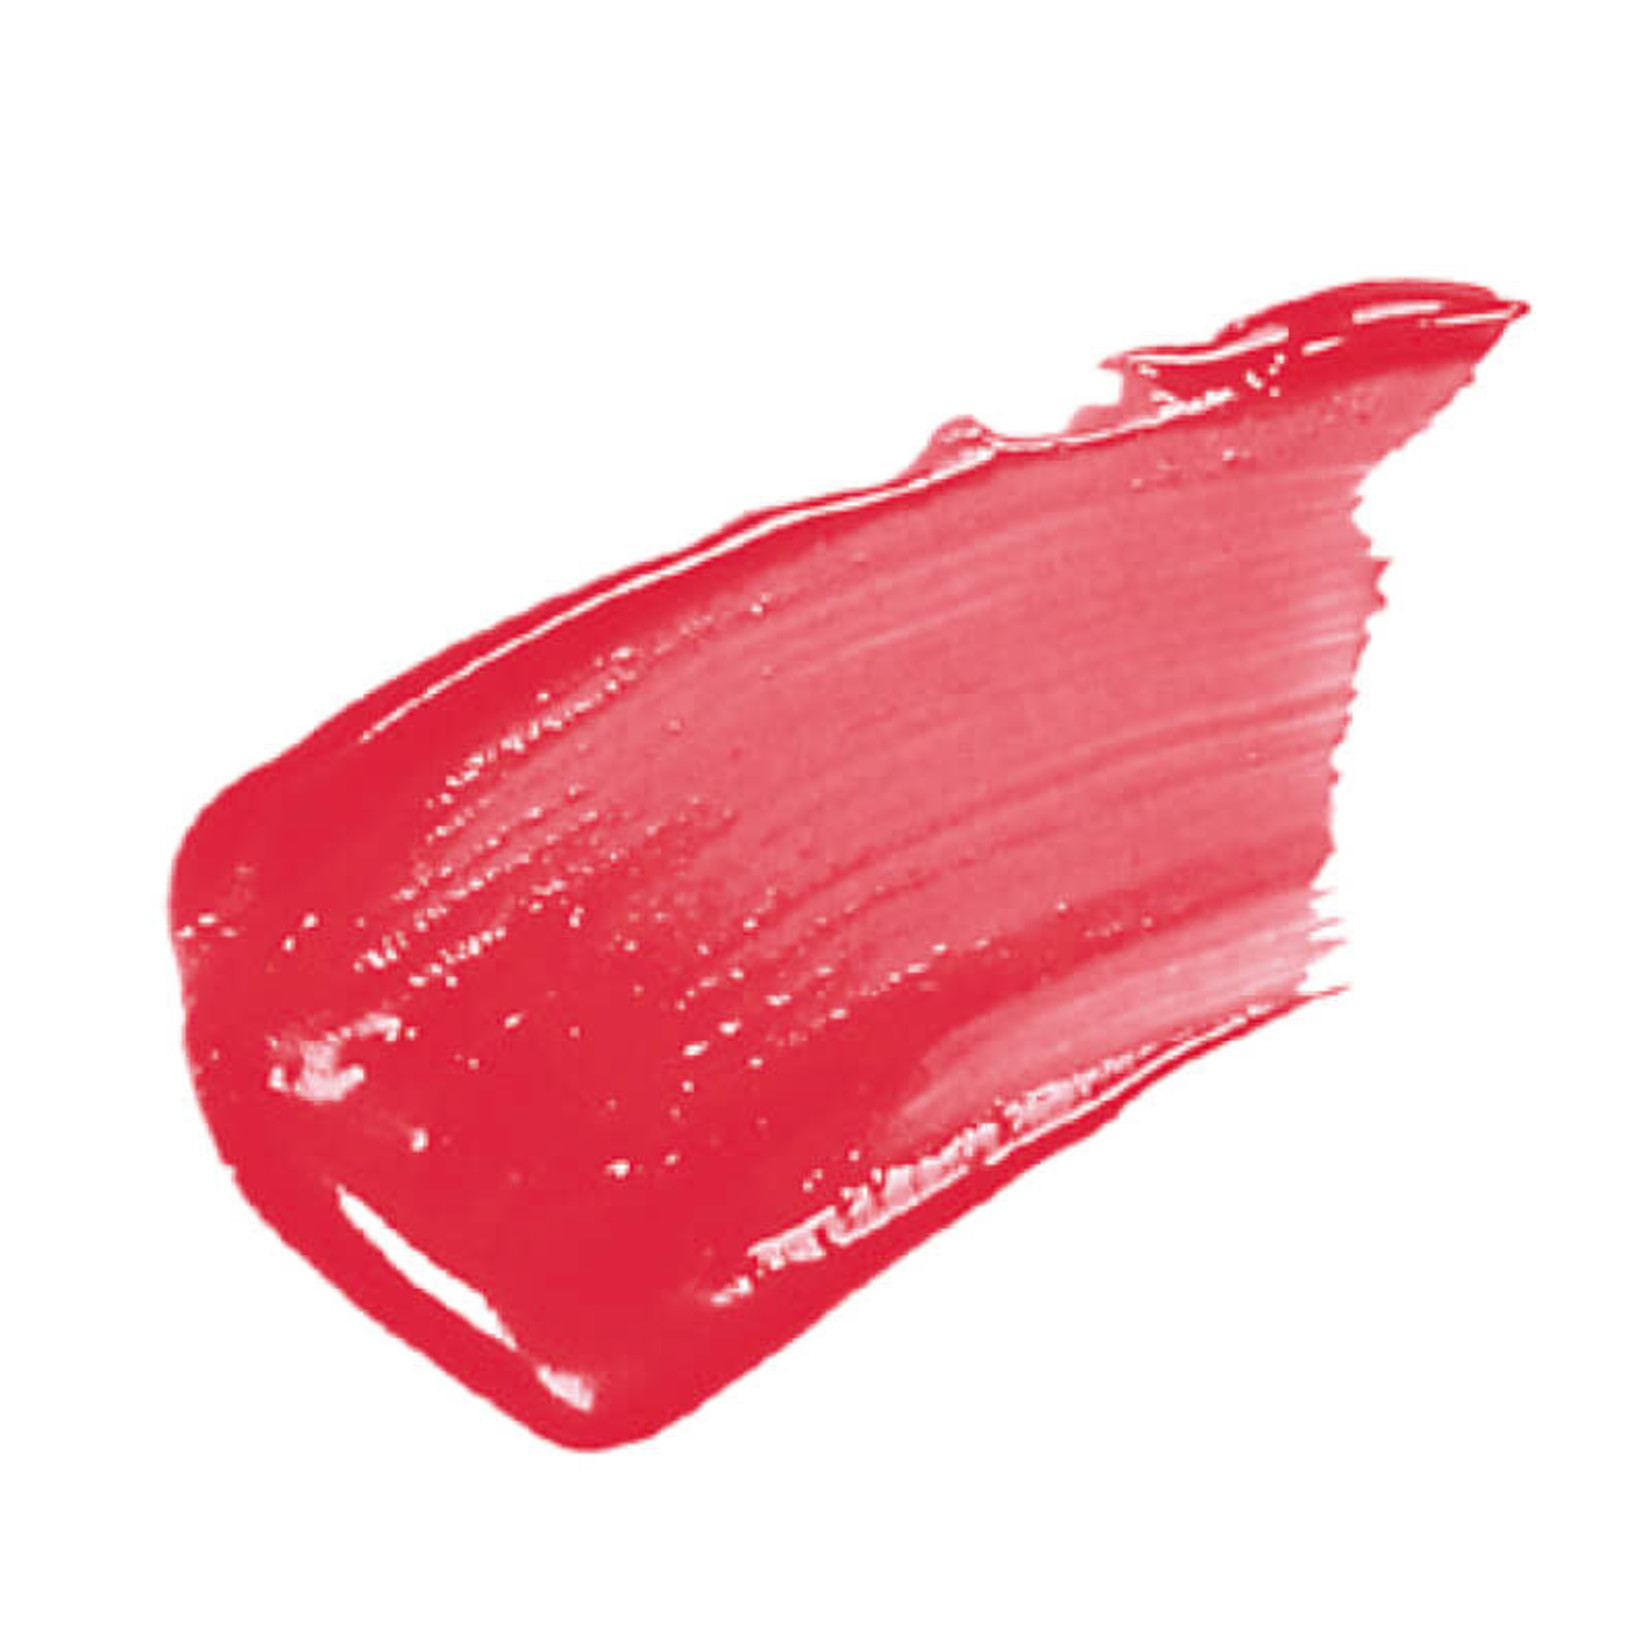 Canmake Juicy Lip Tint